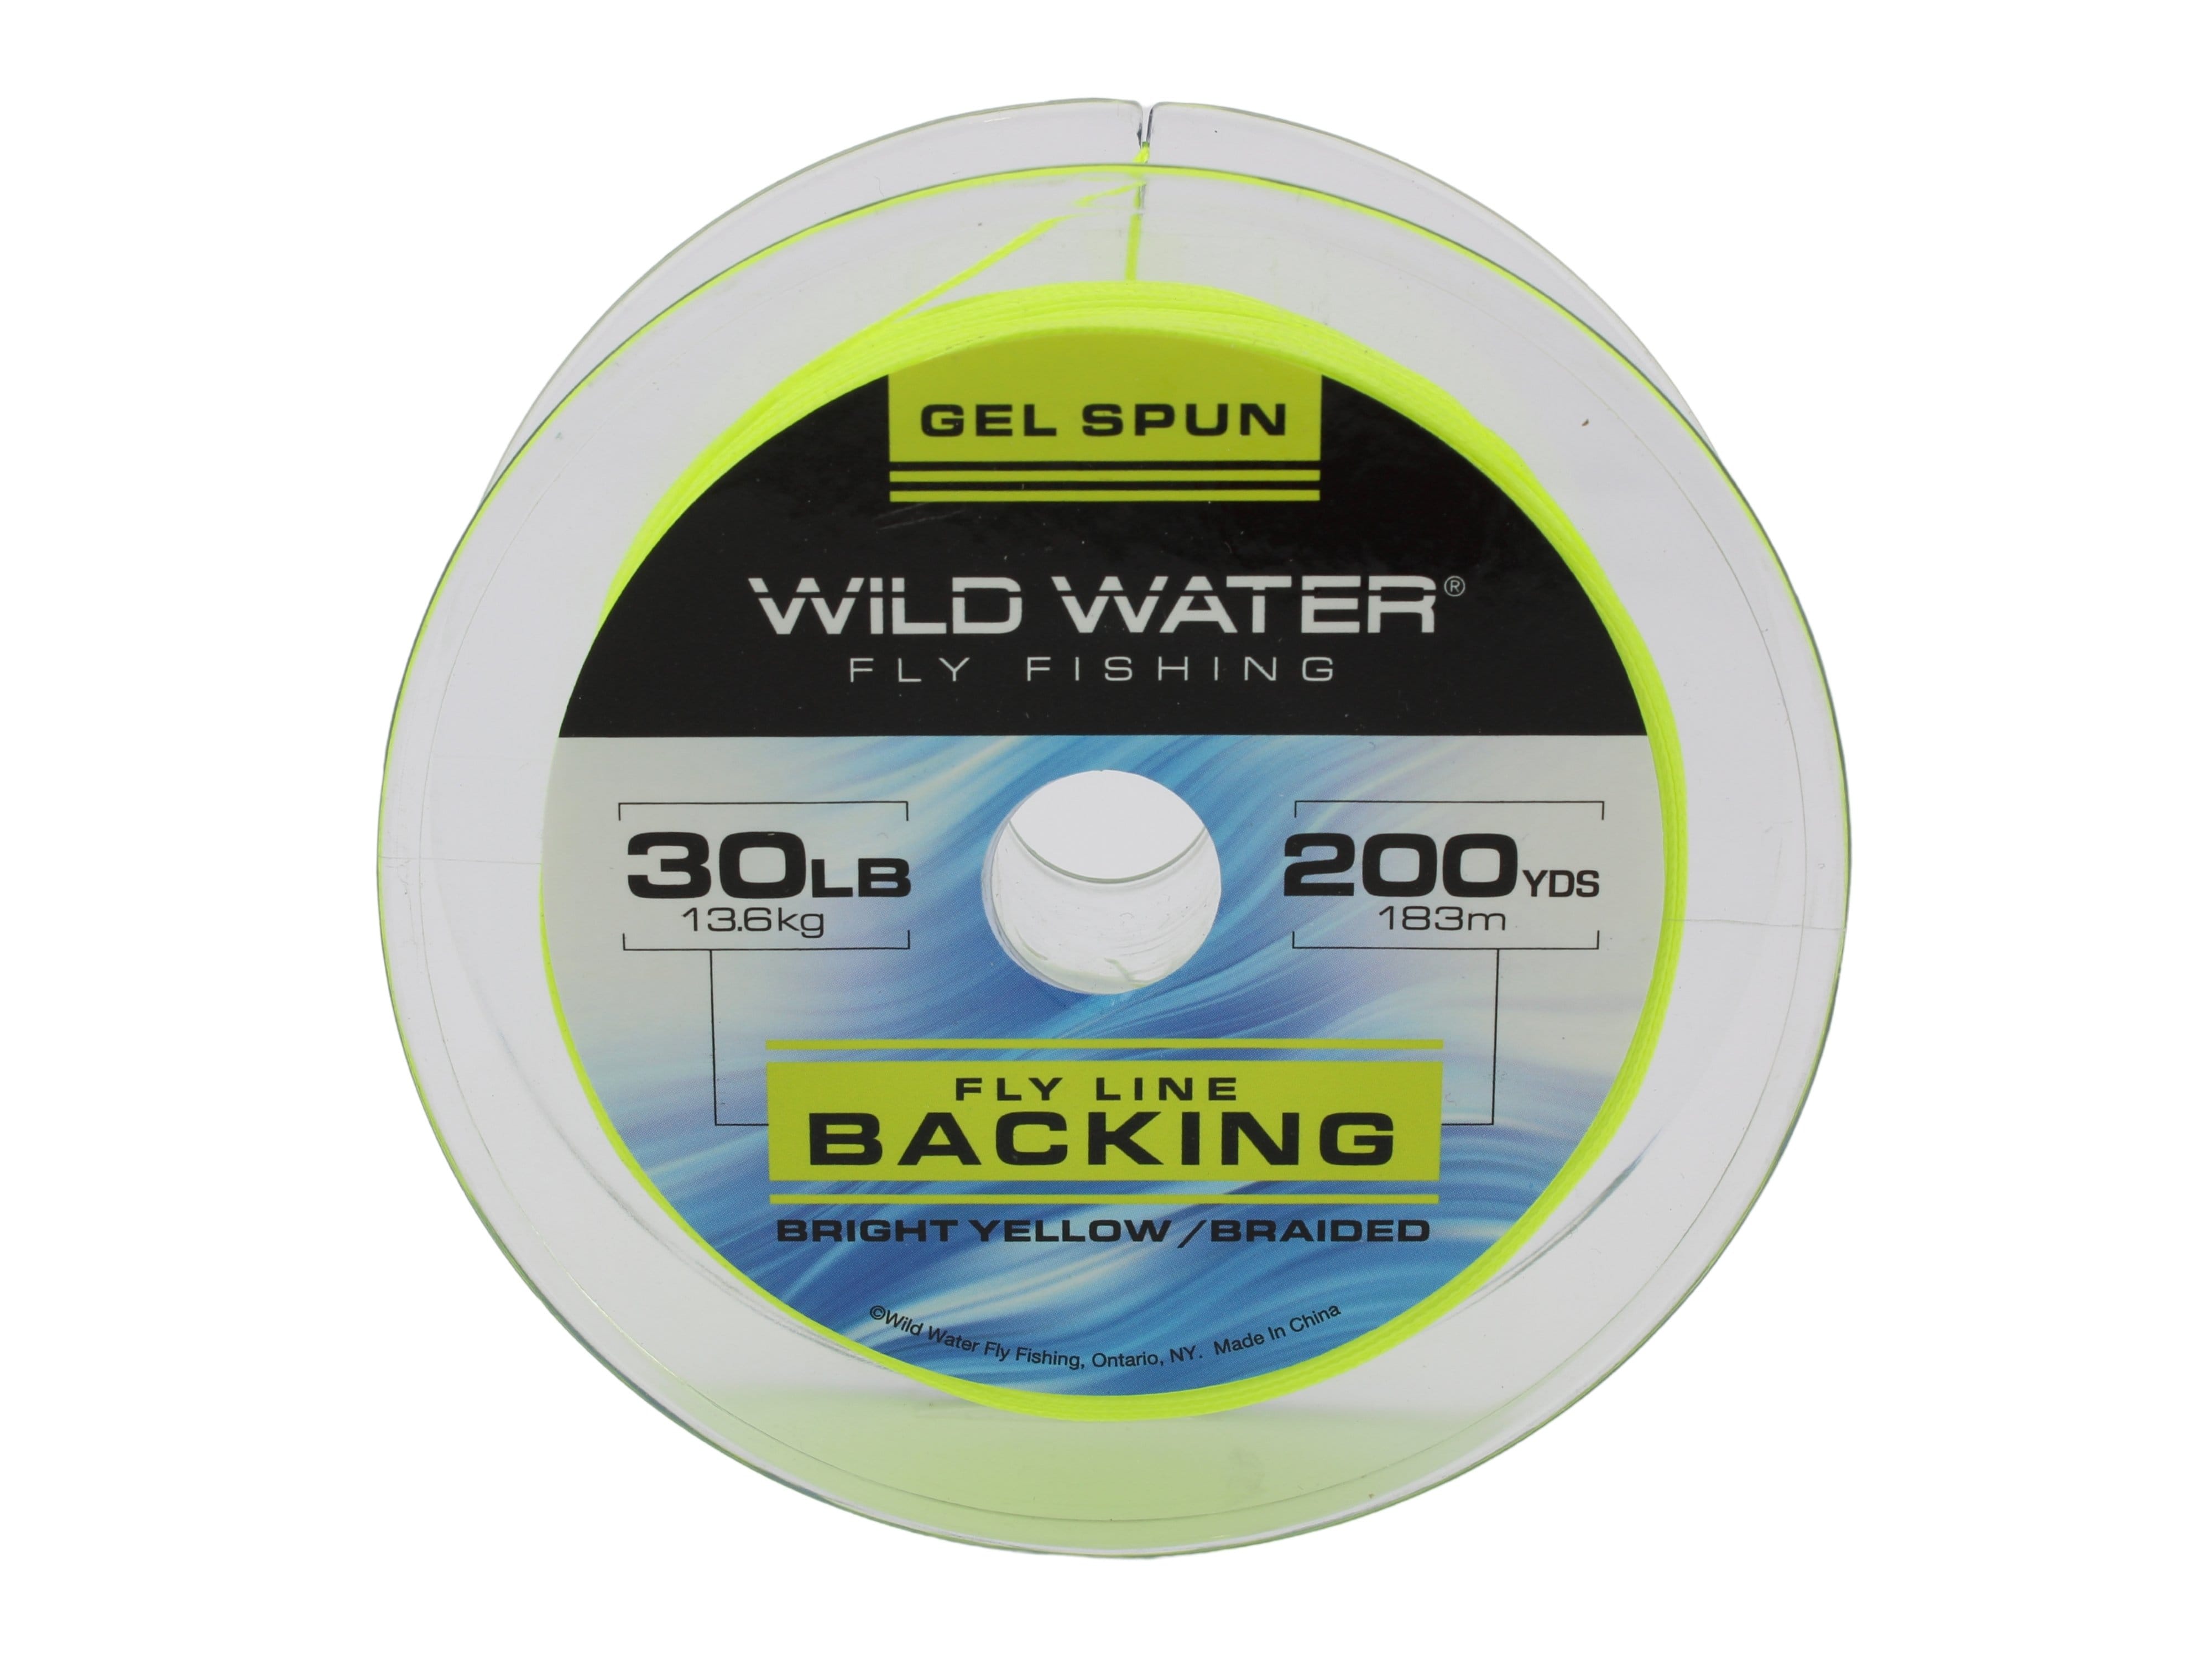 Wild Water Fly Fishing Braided Gel Spun Backing Spool, 30# 200 yards, Bright Yellow